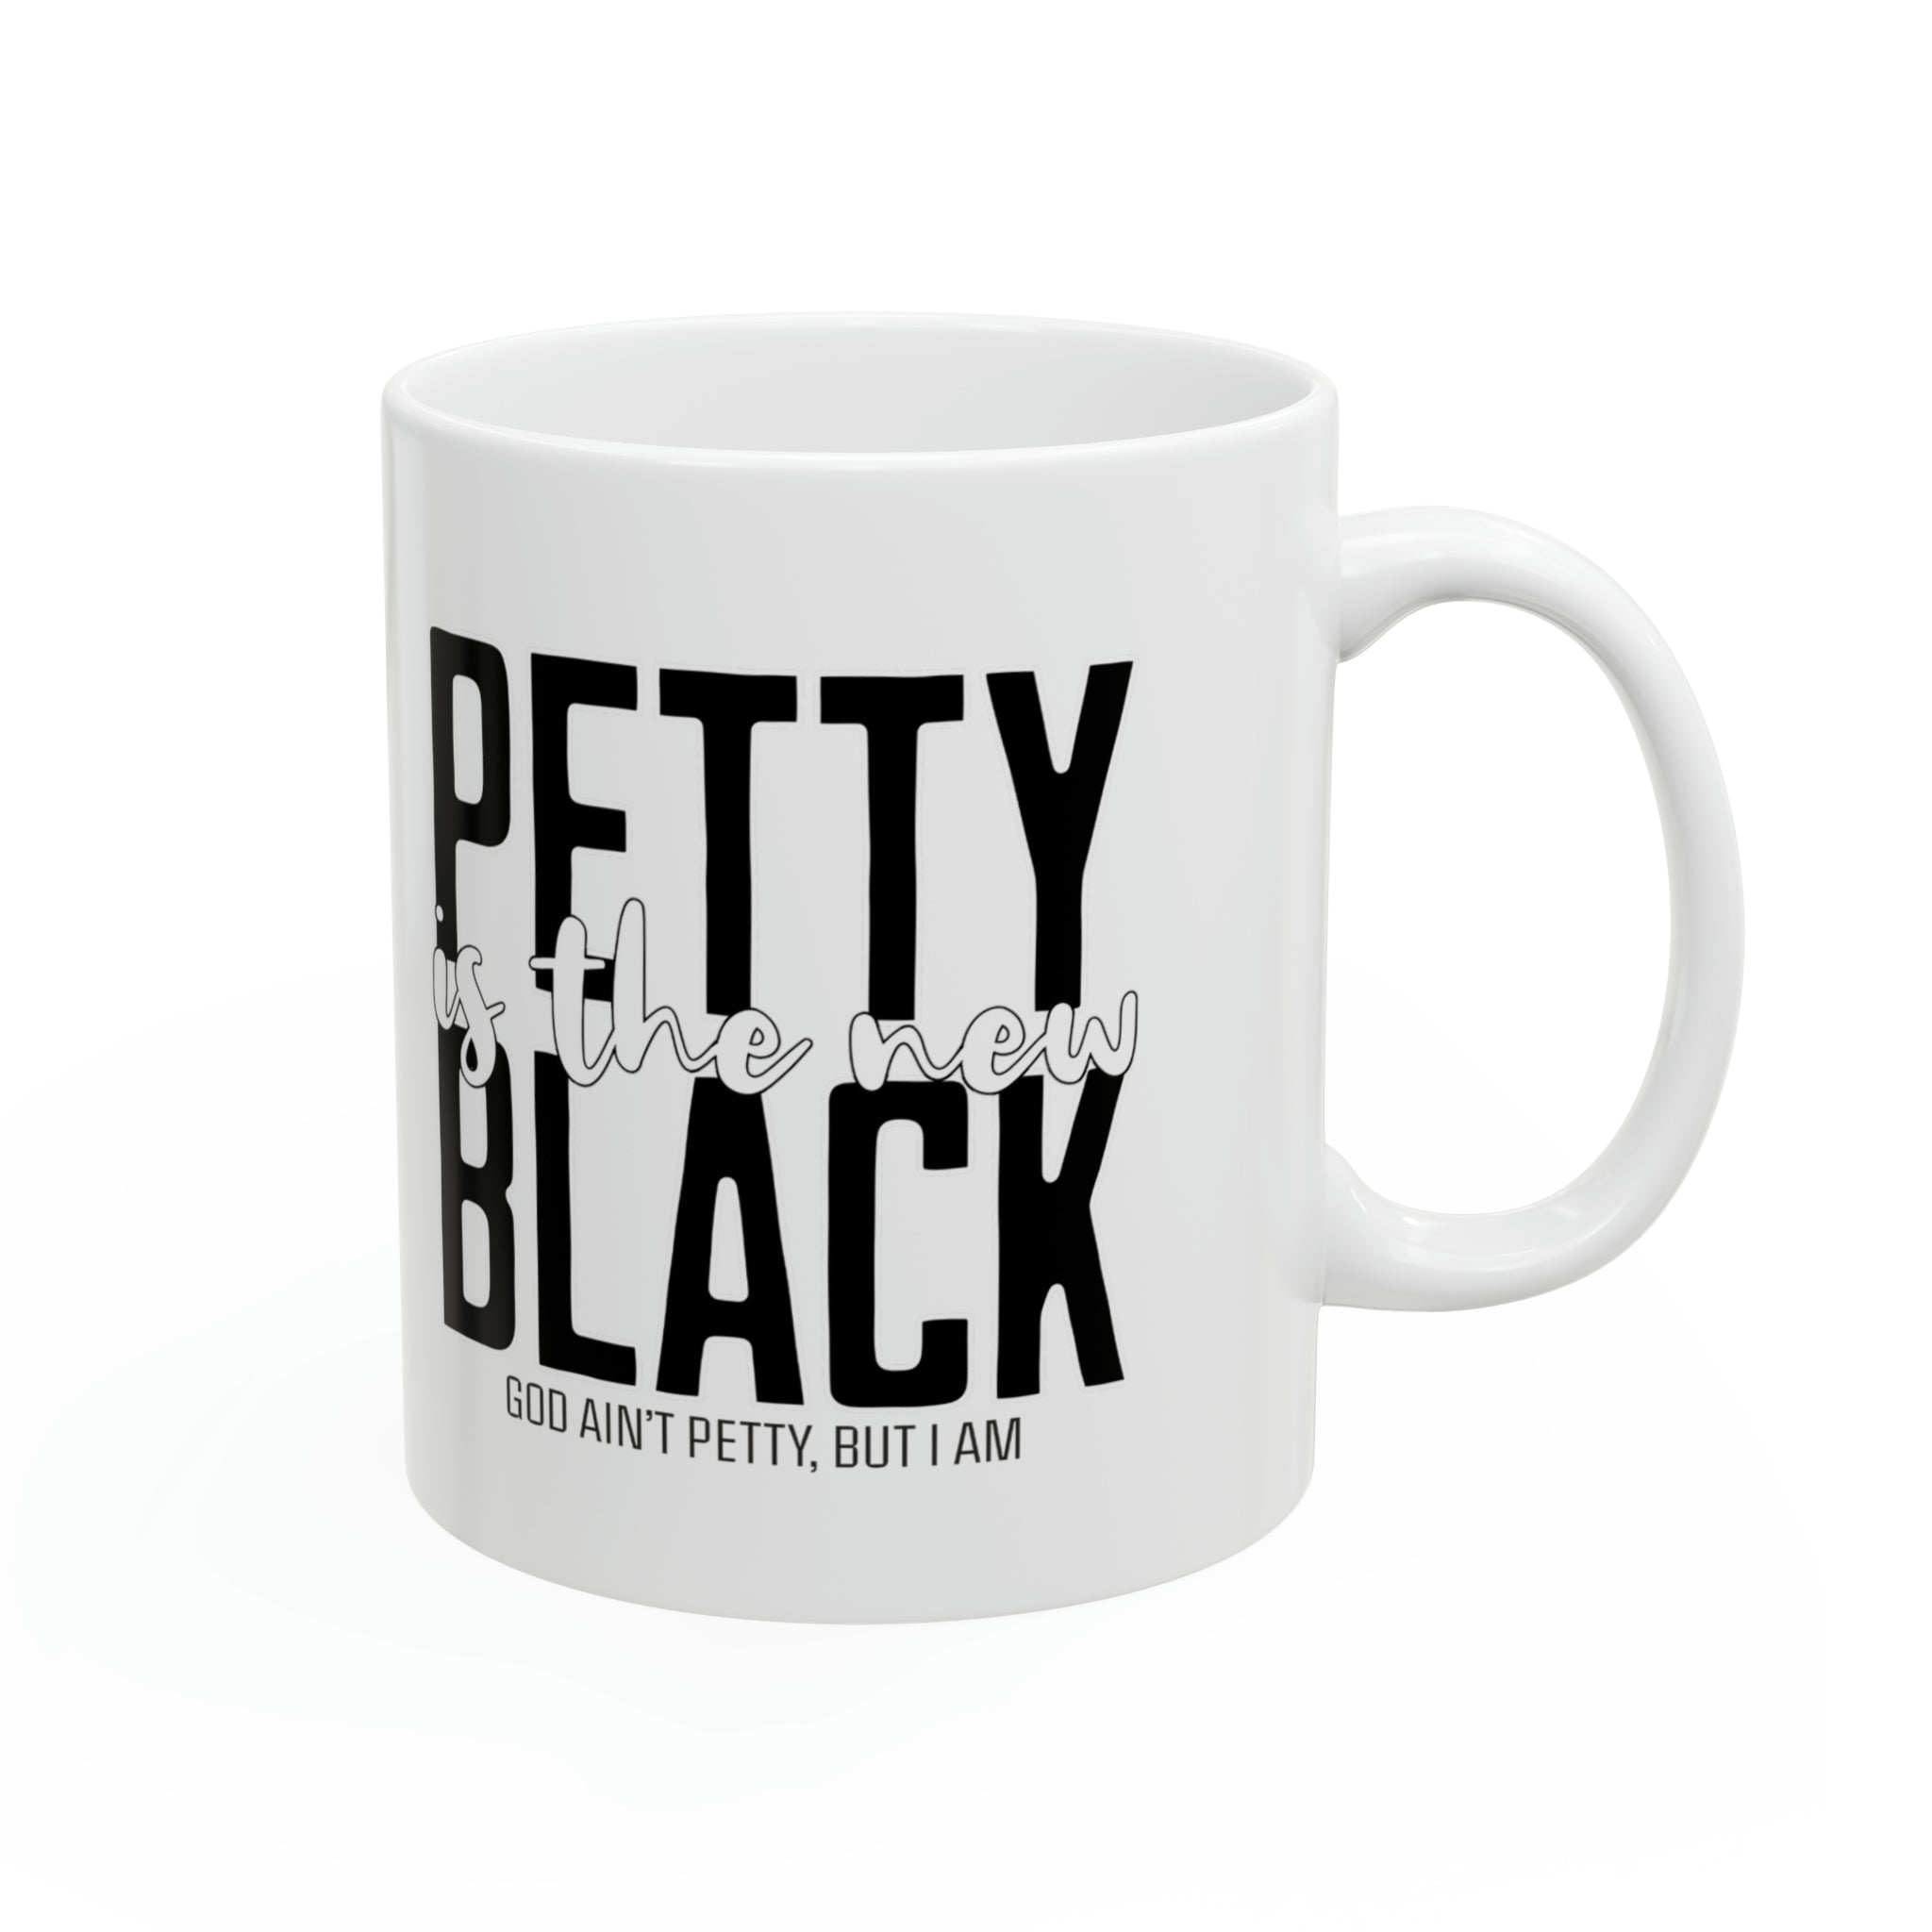 Petty is the New Black Mug 11oz (White & Black)-Mug-The Original God Ain't Petty But I Am